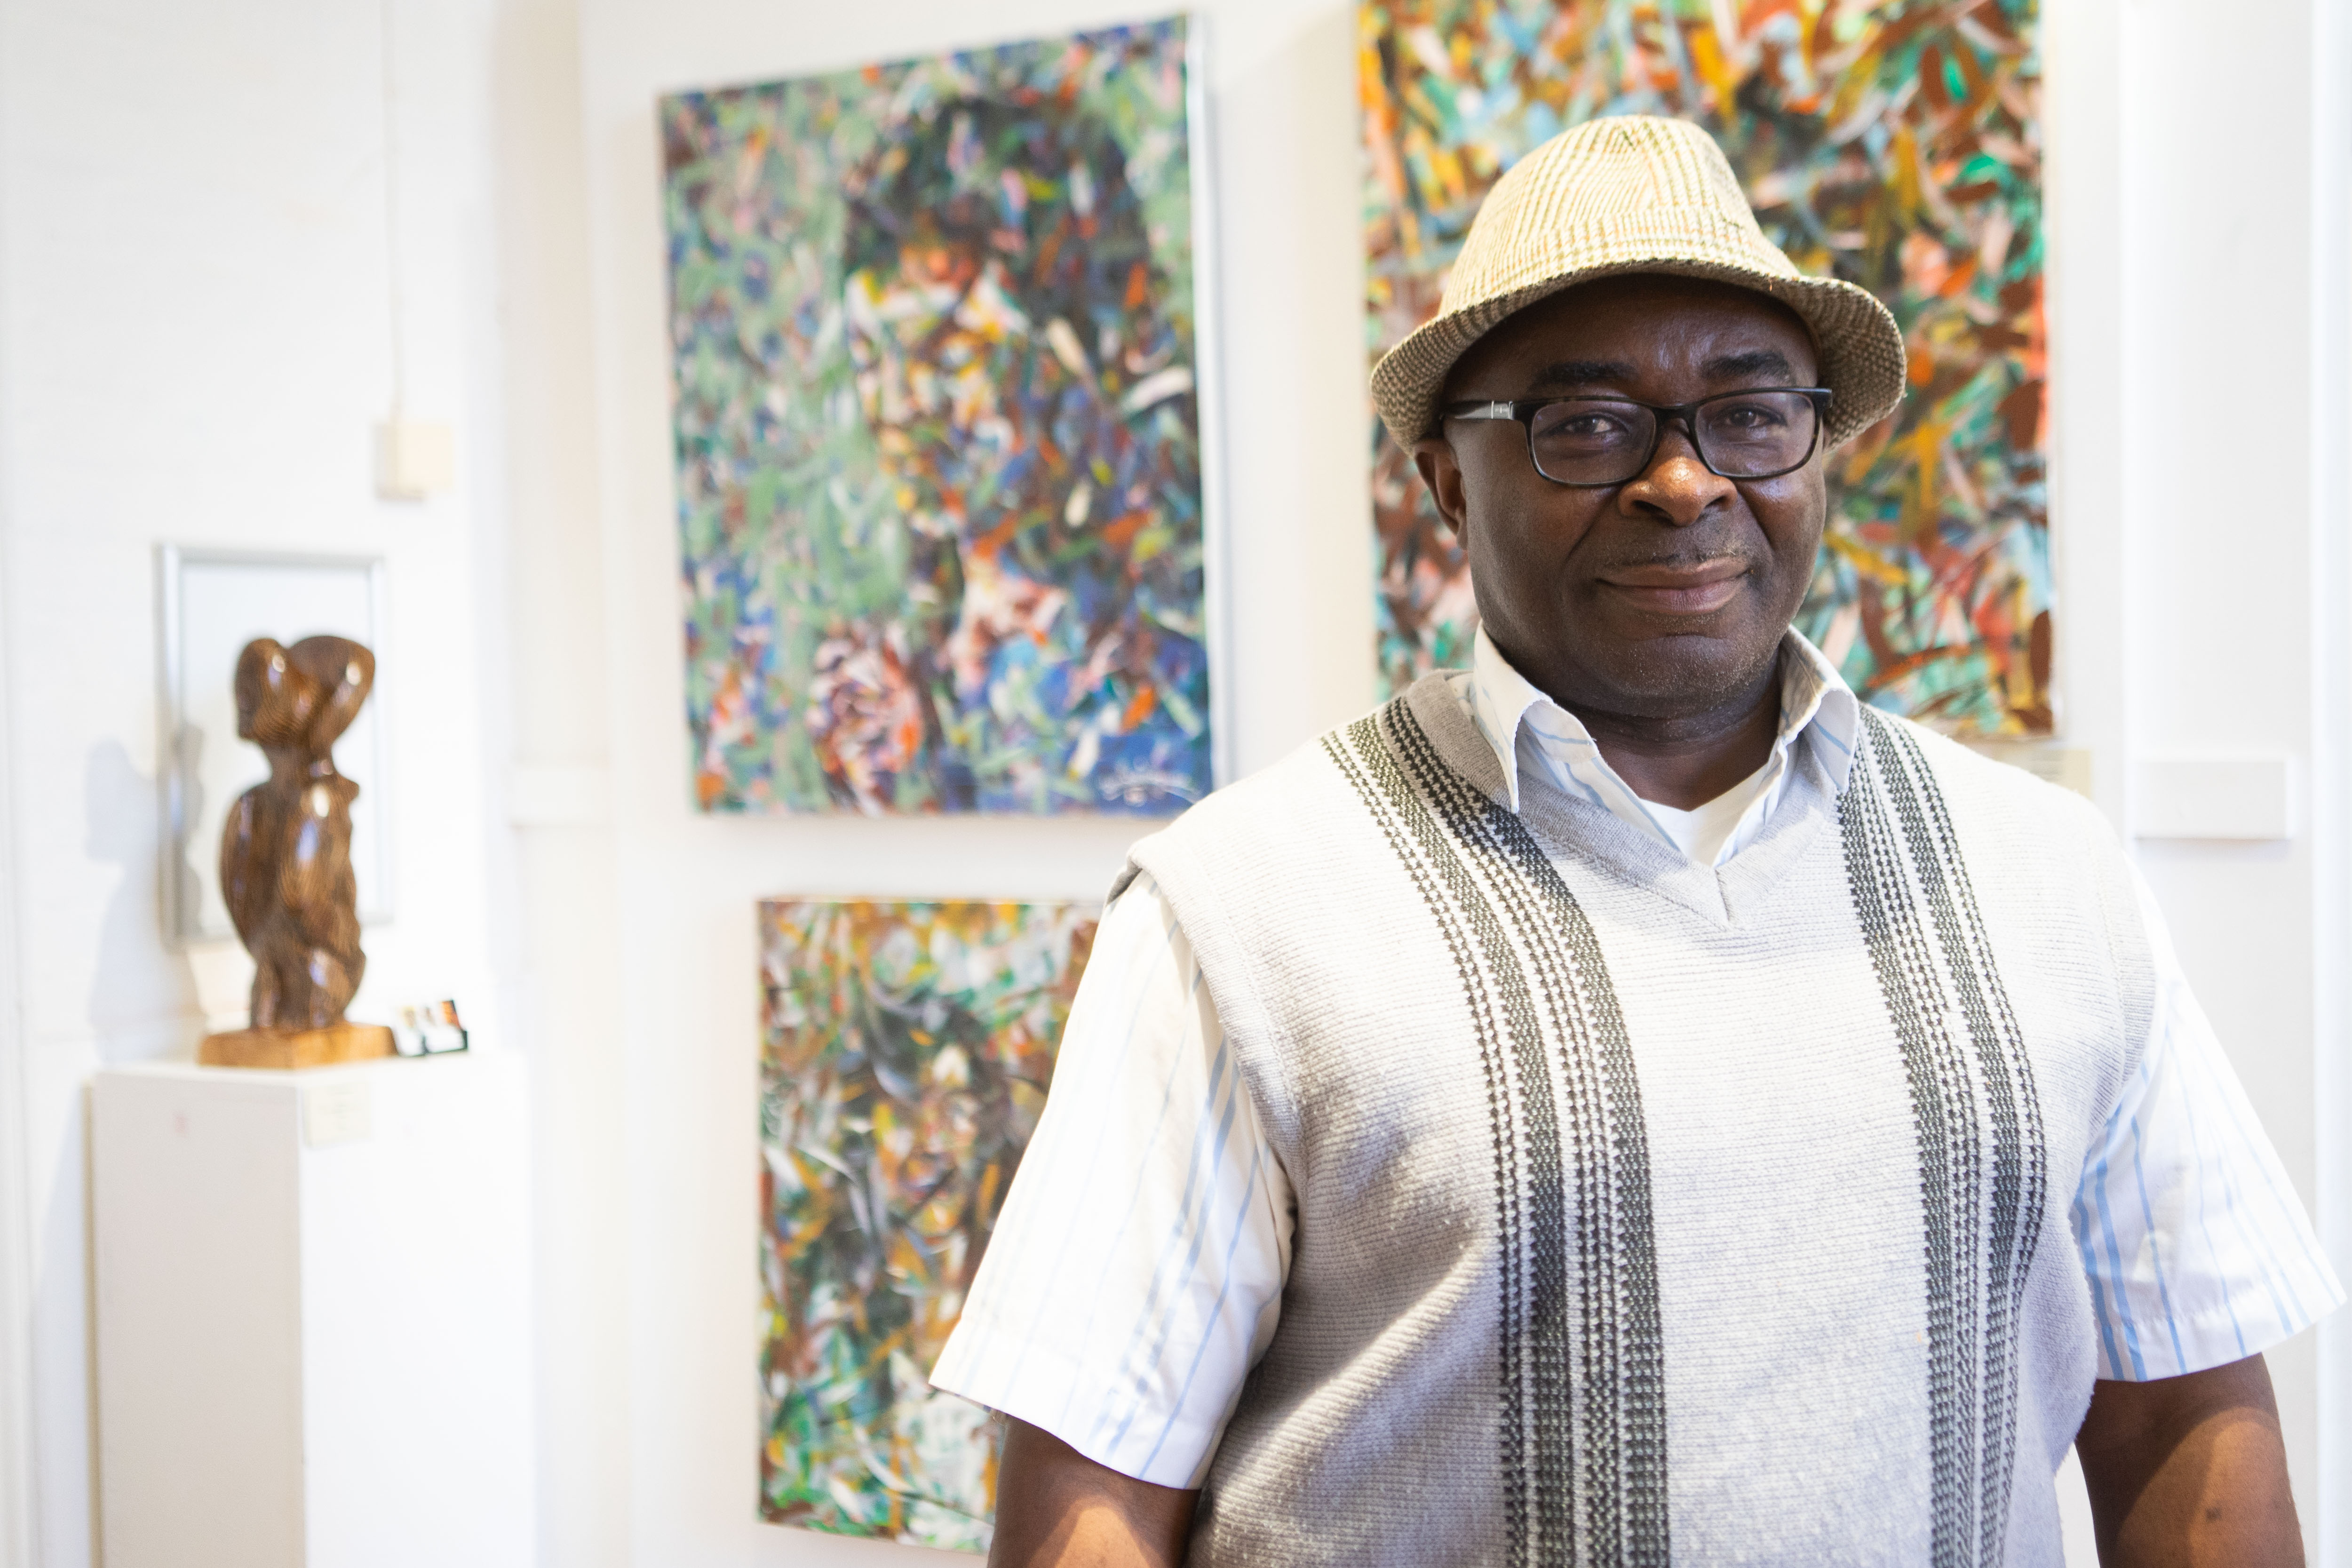 Toni Ndikanwu, the artist, stood in front of his art work